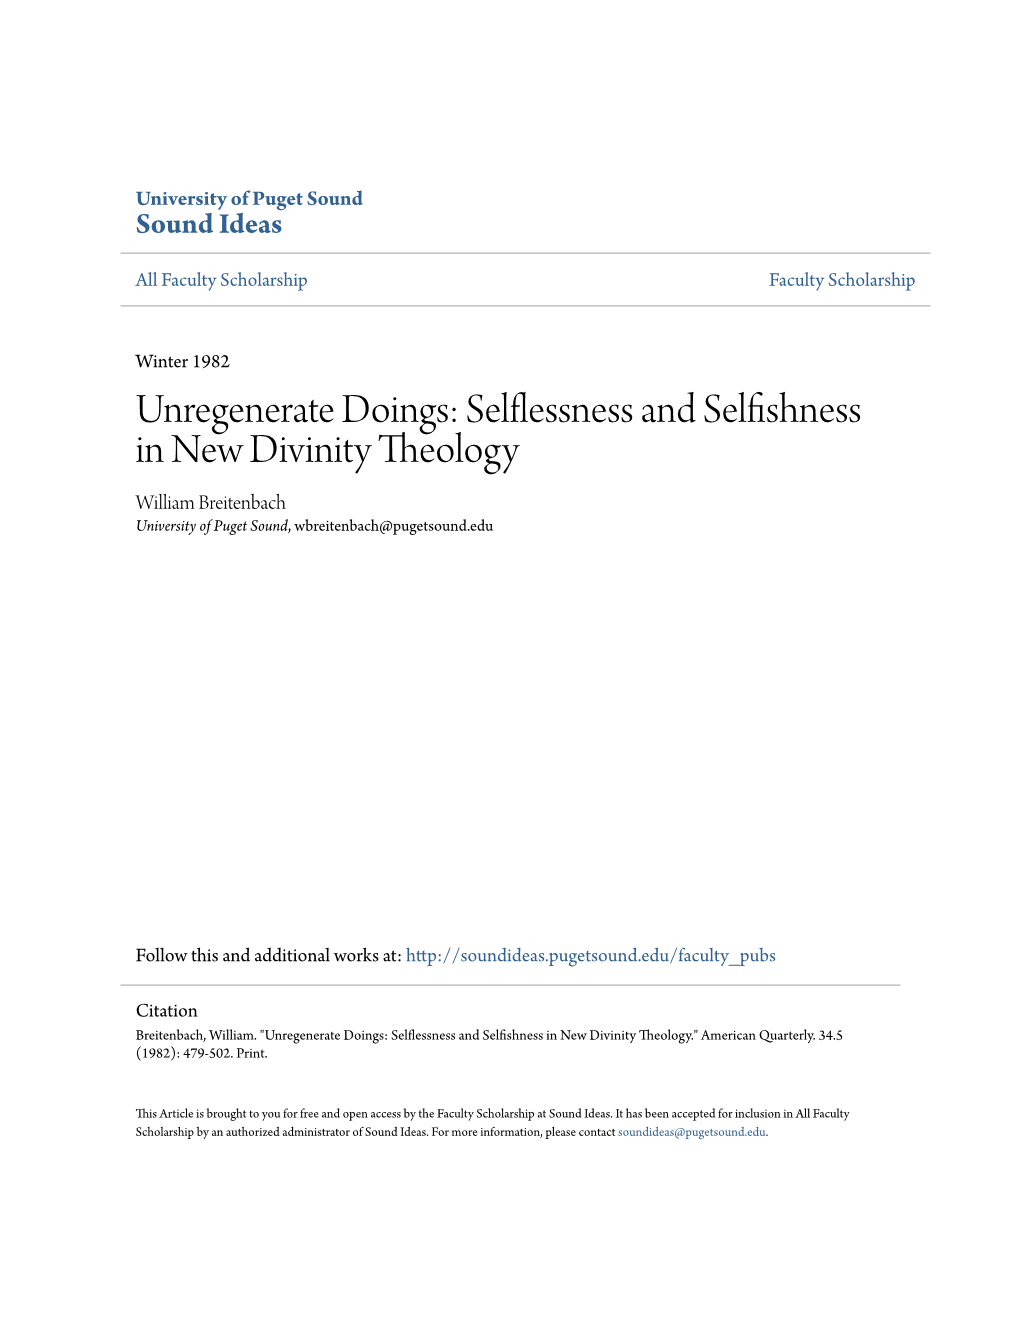 Unregenerate Doings: Selflessness and Selfishness in New Divinity Theology William Breitenbach University of Puget Sound, Wbreitenbach@Pugetsound.Edu